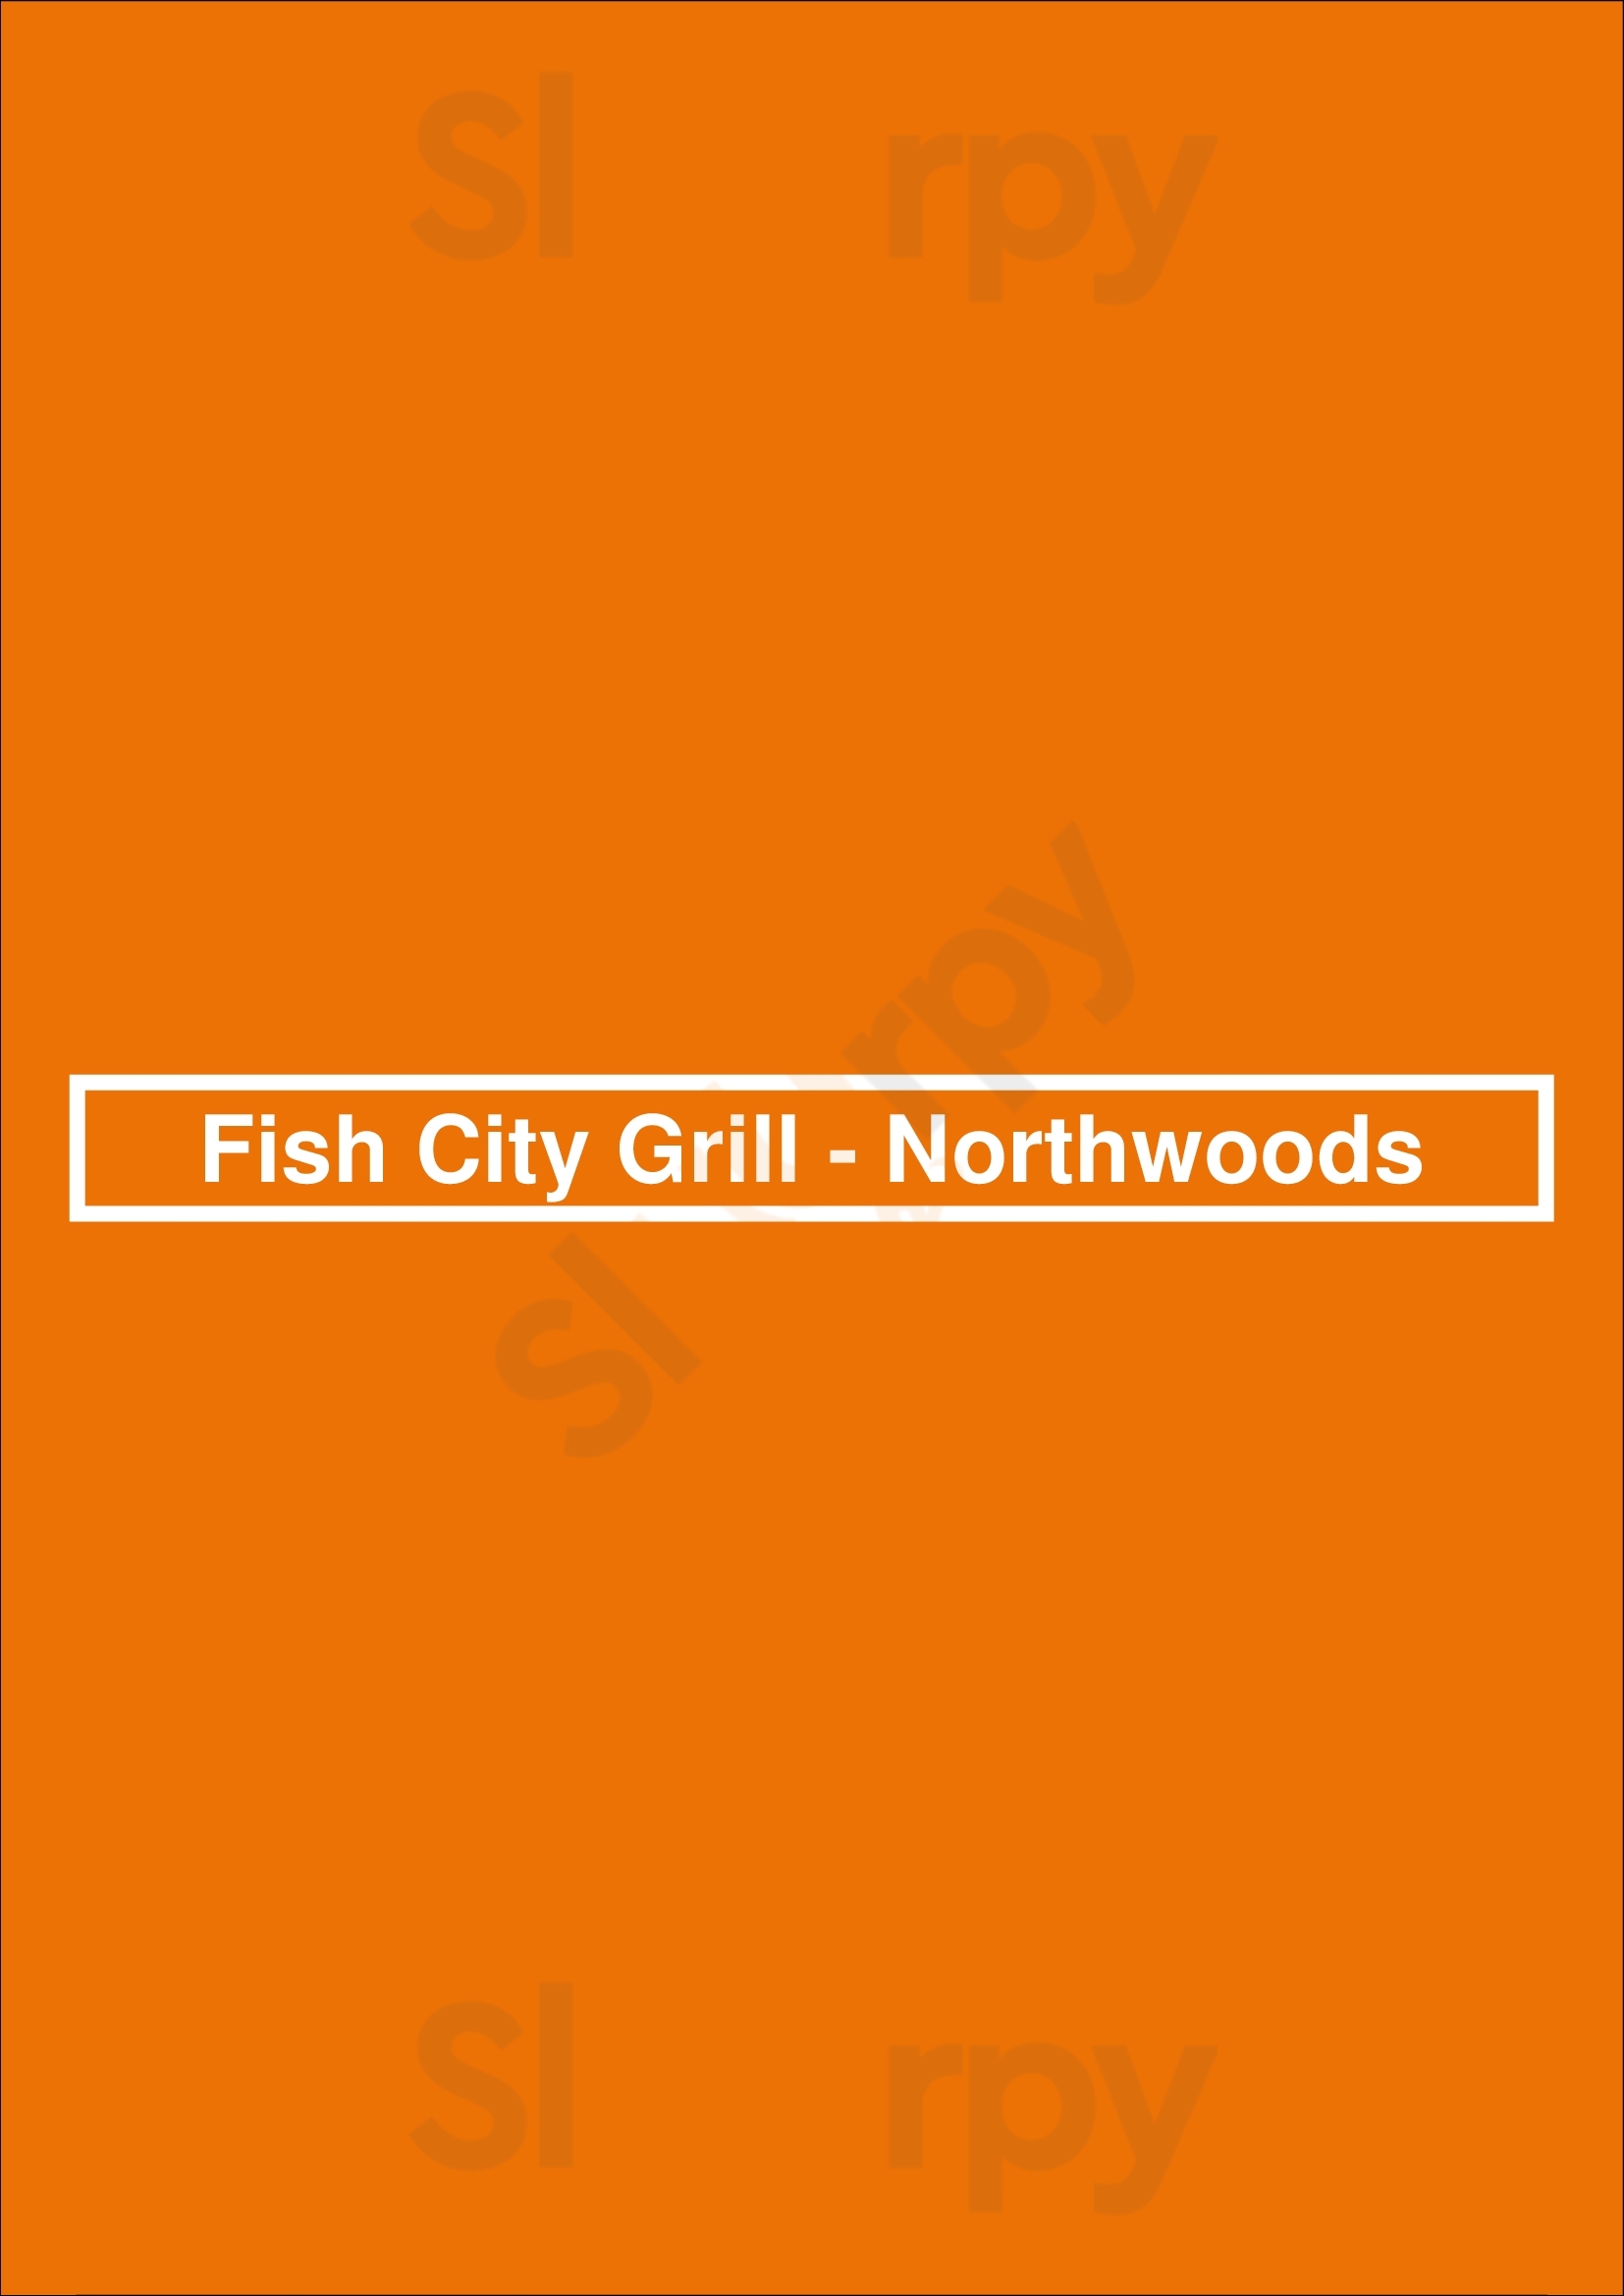 Fish City Grill - Northwoods San Antonio Menu - 1